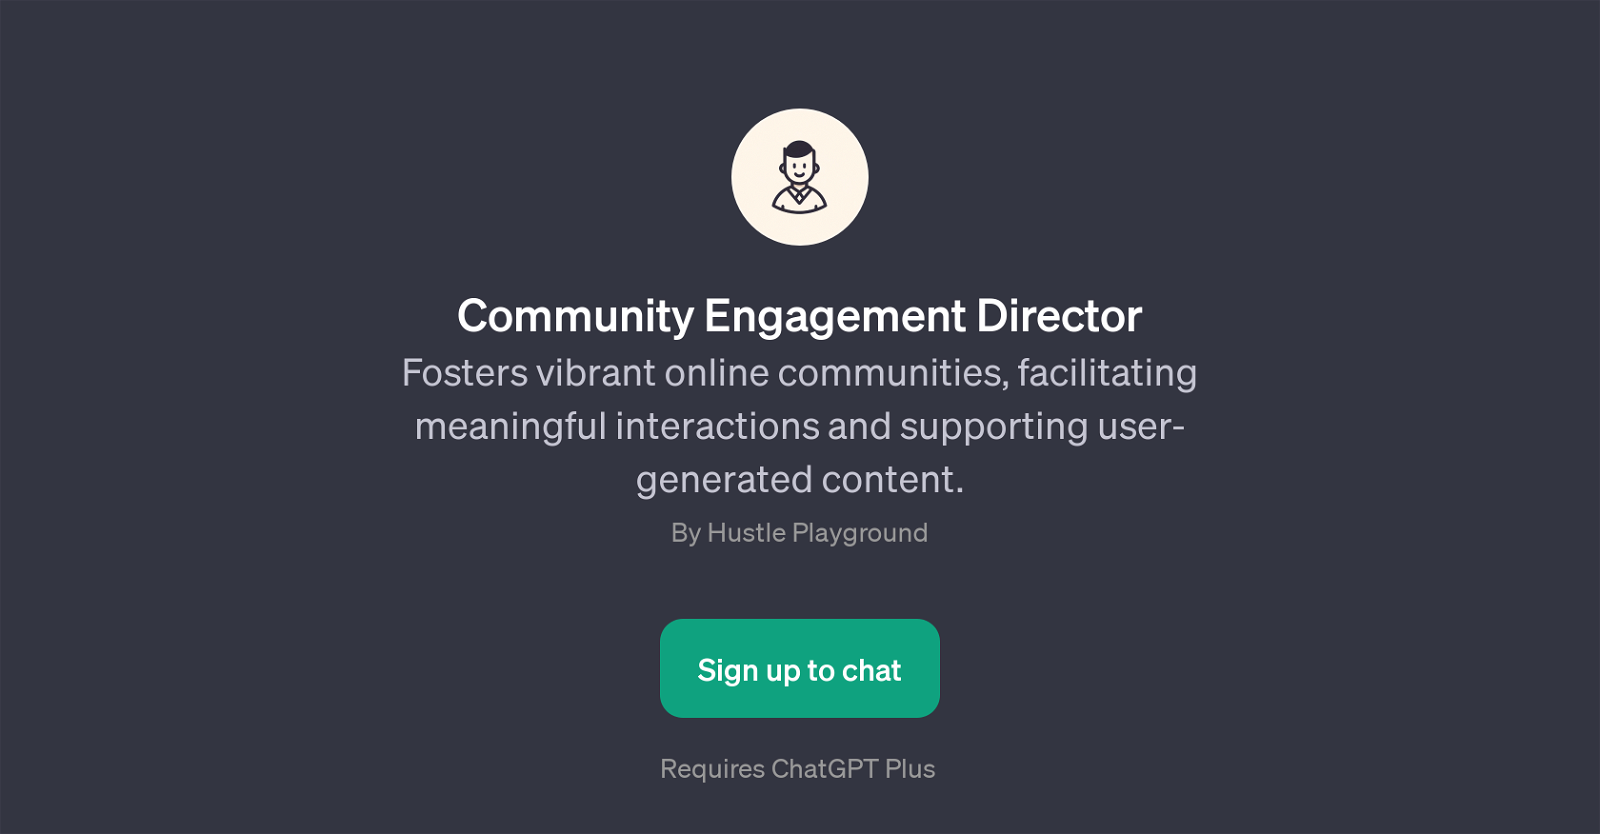 Community Engagement Director website